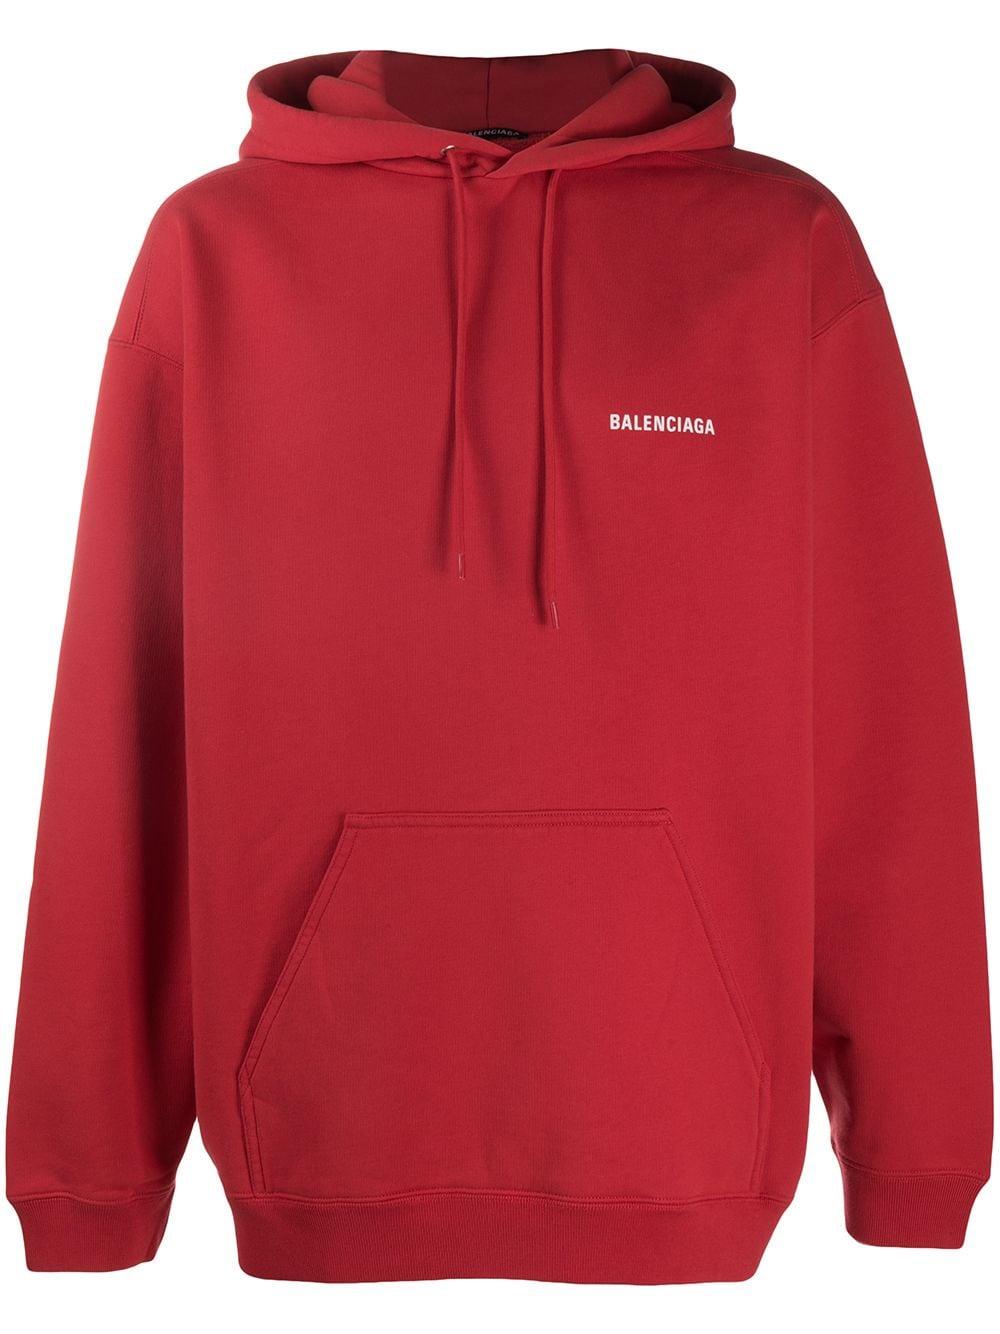 Balenciaga Cotton Logo-print Hoodie in Red for Men - Lyst